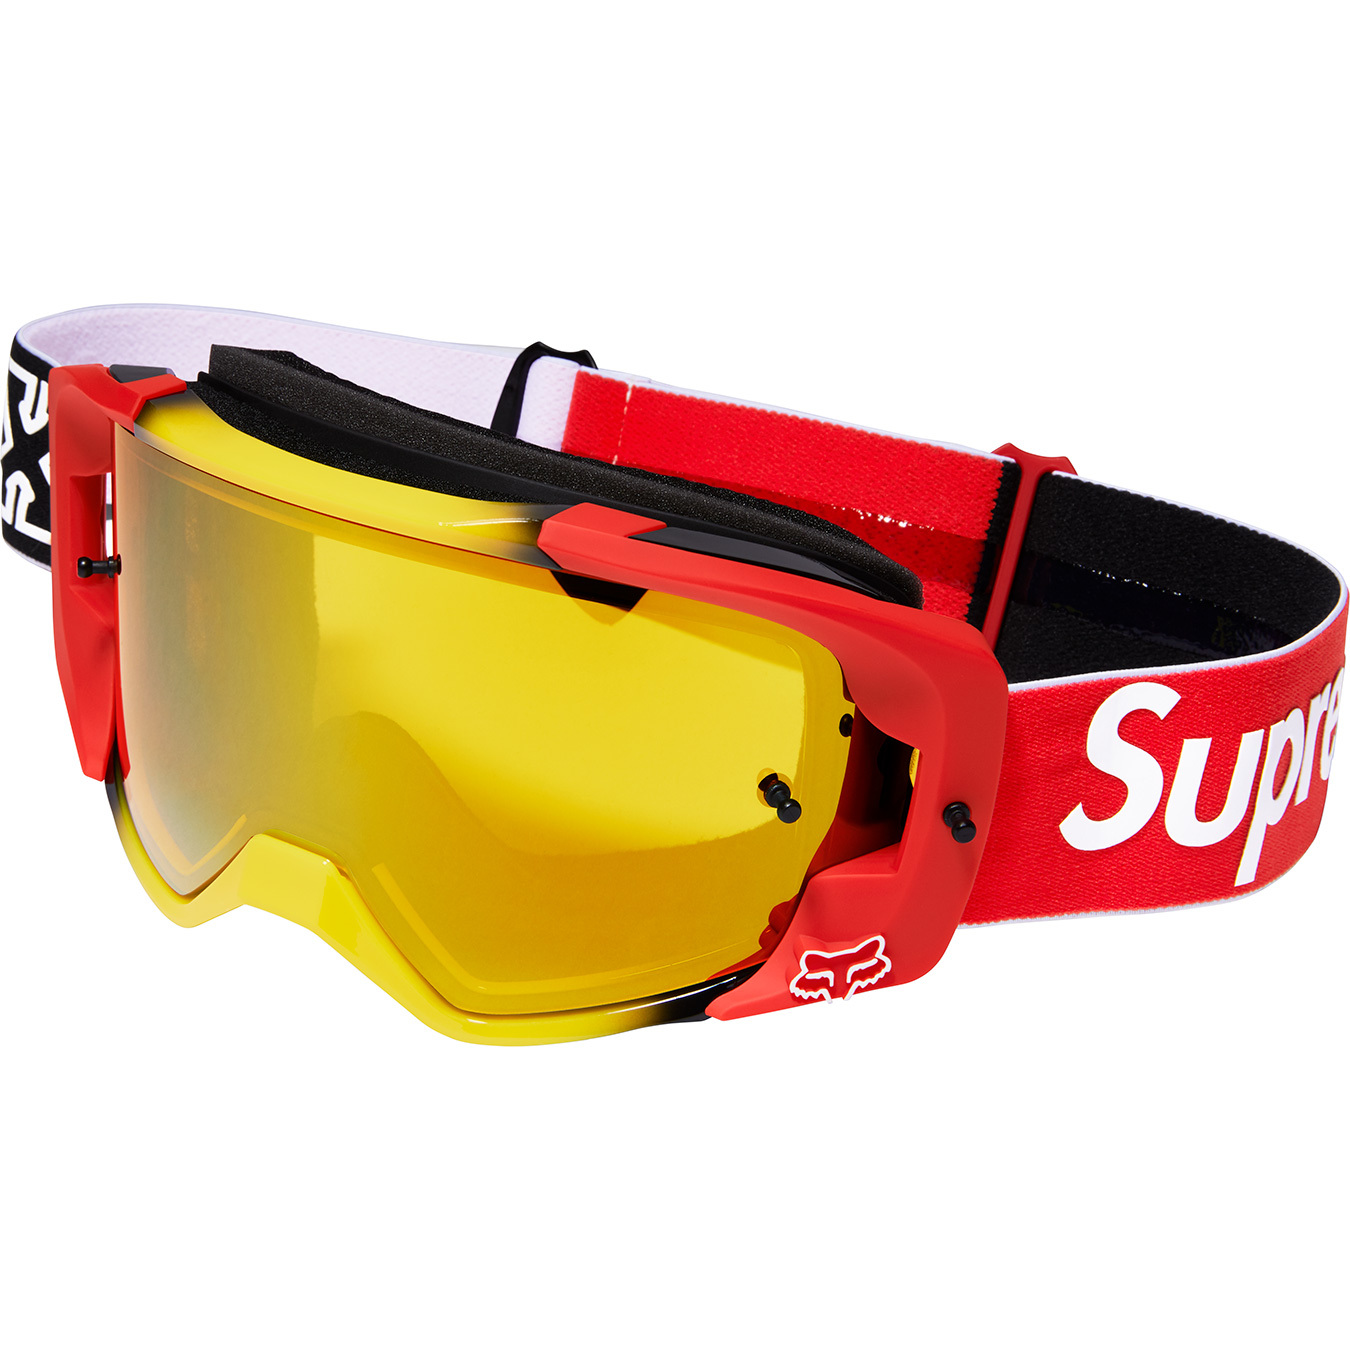 Supreme®/Honda® Fox® Racing Vue Goggles - Supreme Community